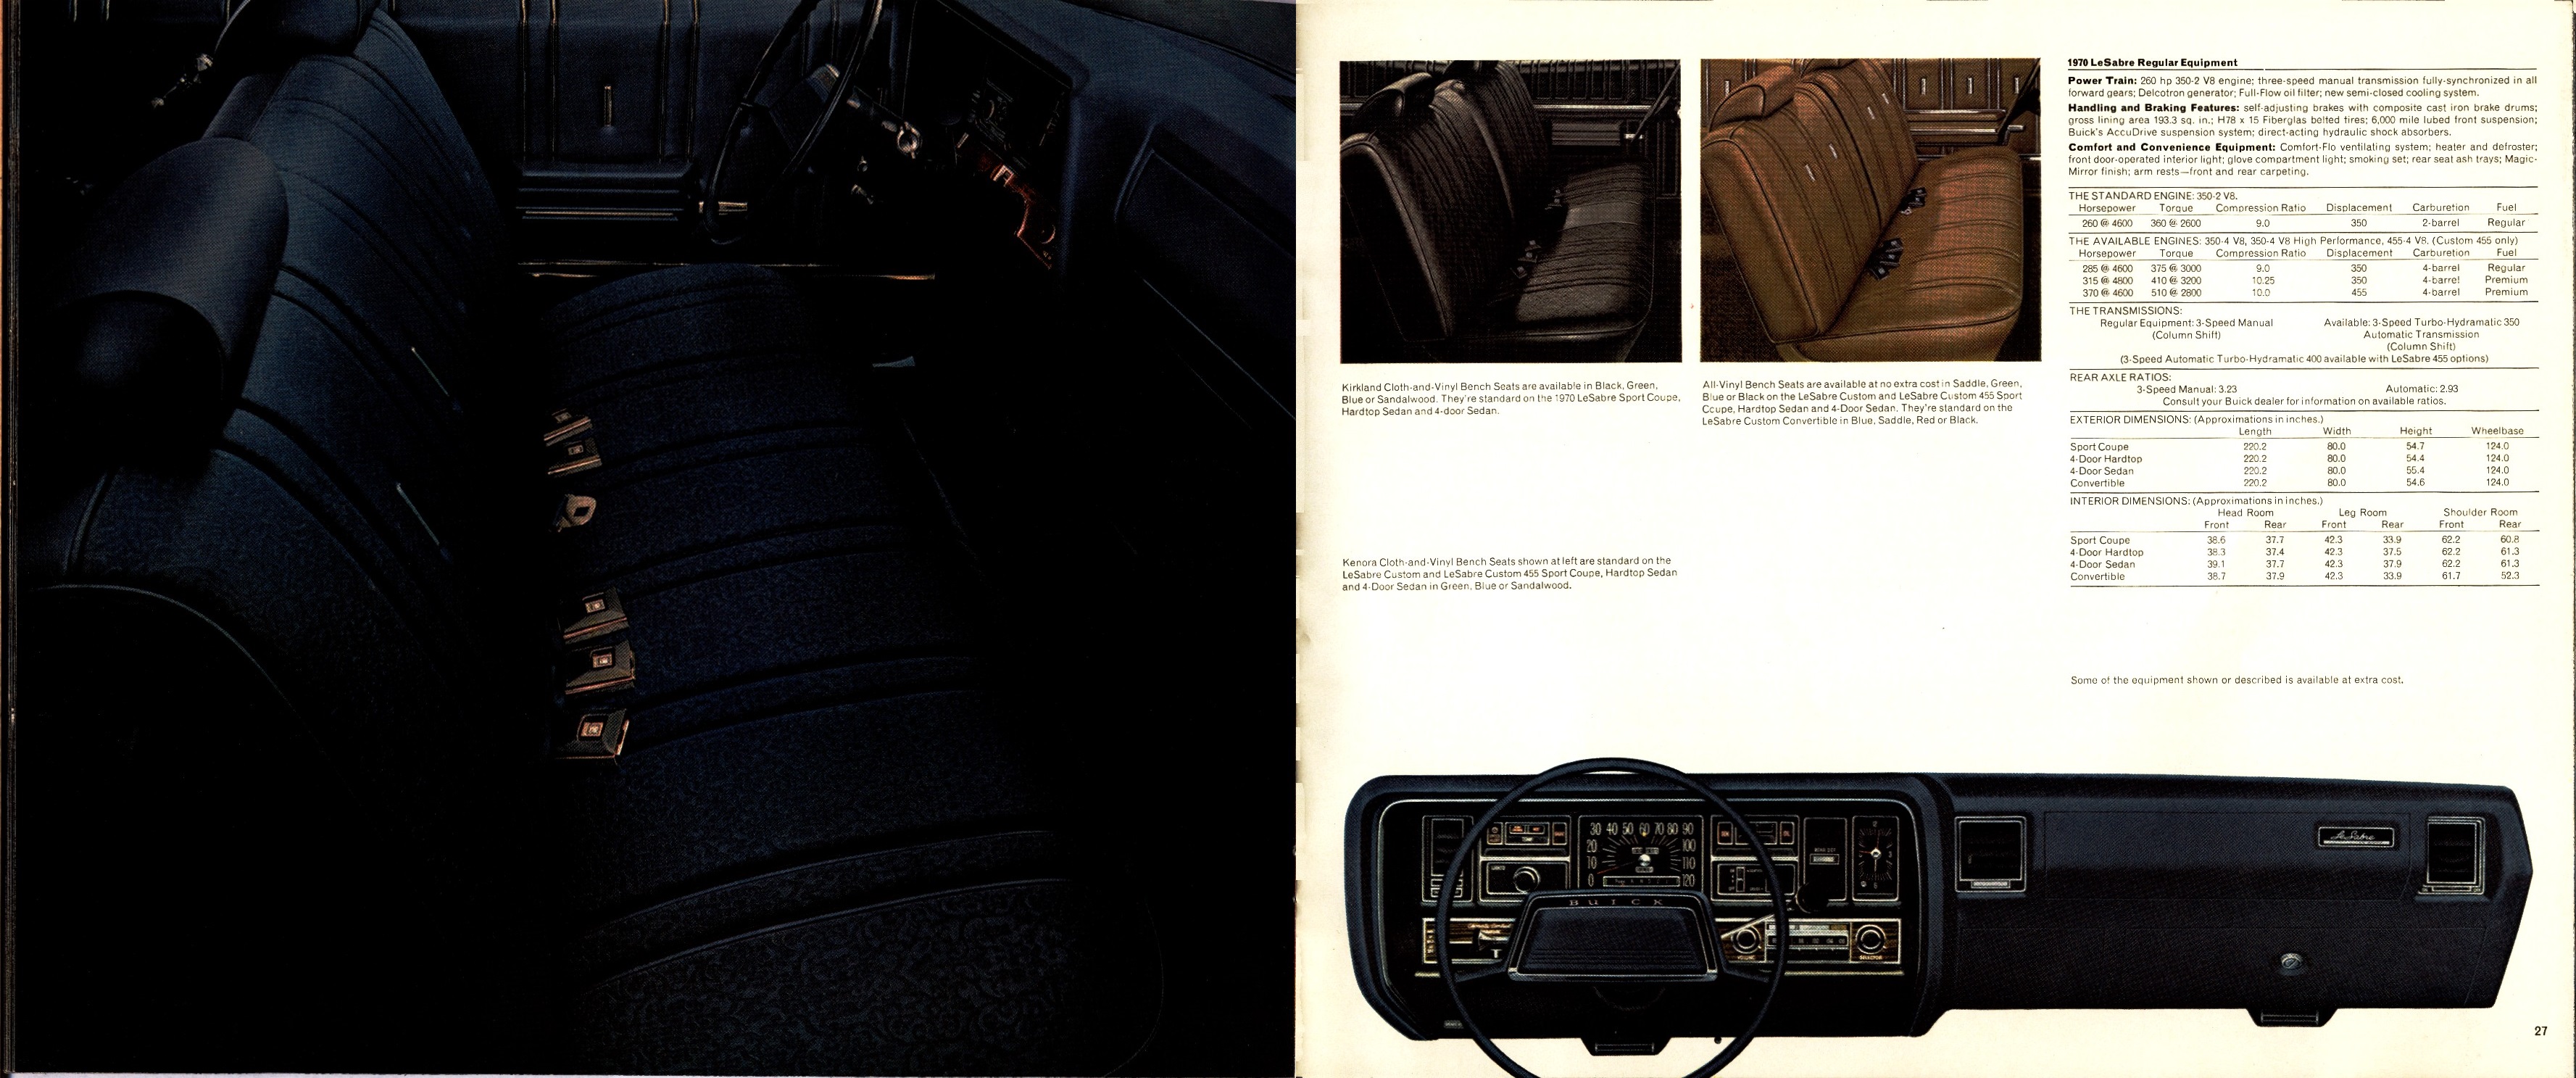 1970 Buick Full Line Prestige Brochure 26-27